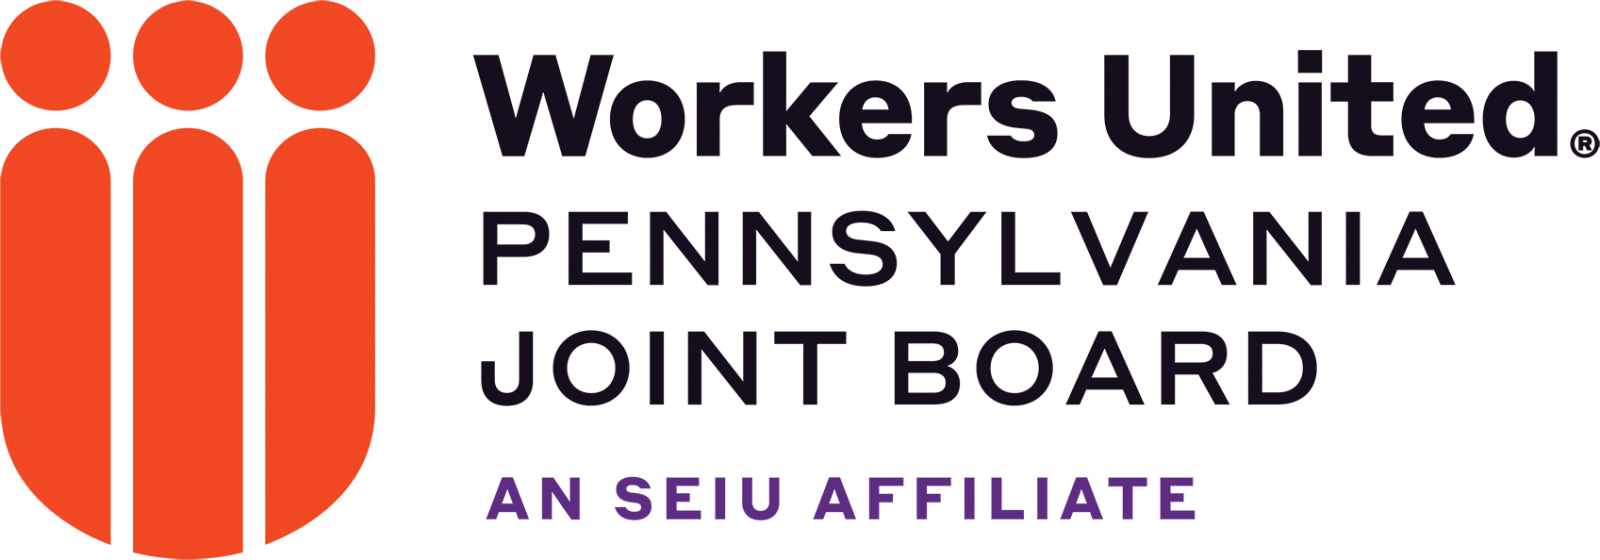 Workers United Pennsylvania Joint Board, an SEIU affiliate